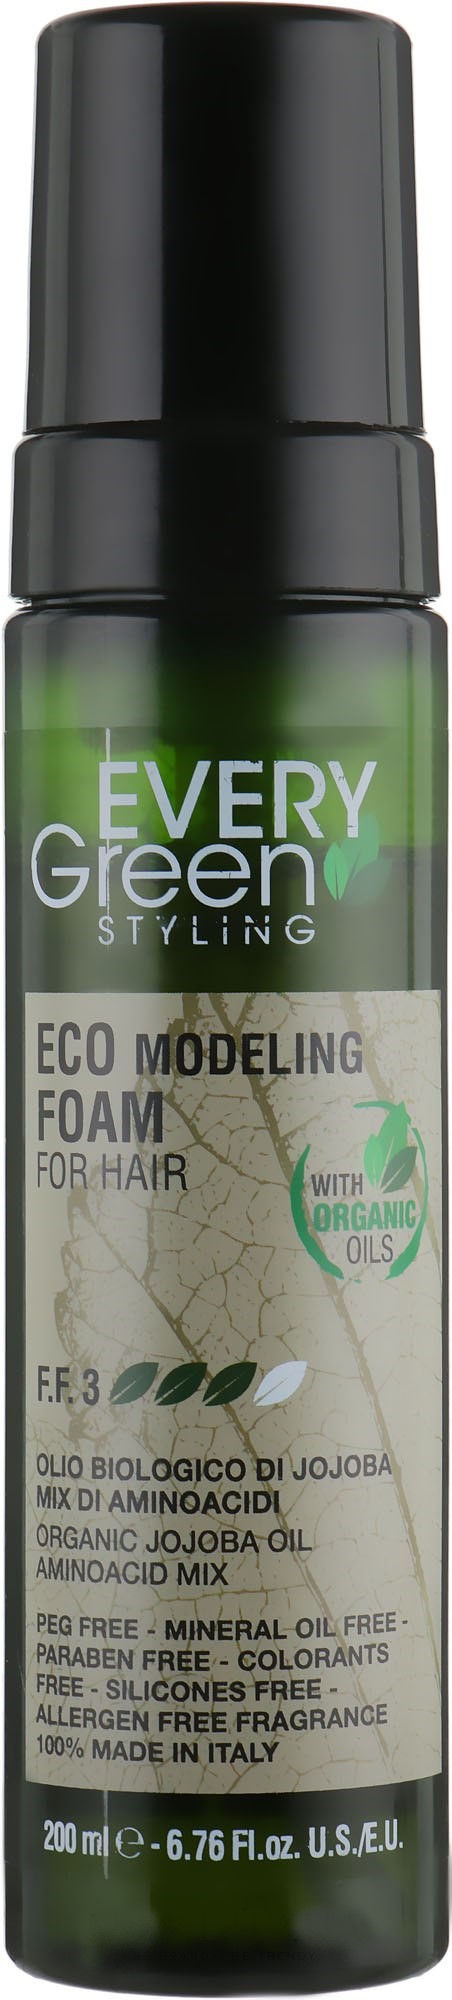 Dikson EVERY GREEN Экологическая моделирующая пена, 200мл. Eco Modeling Froam For Hair